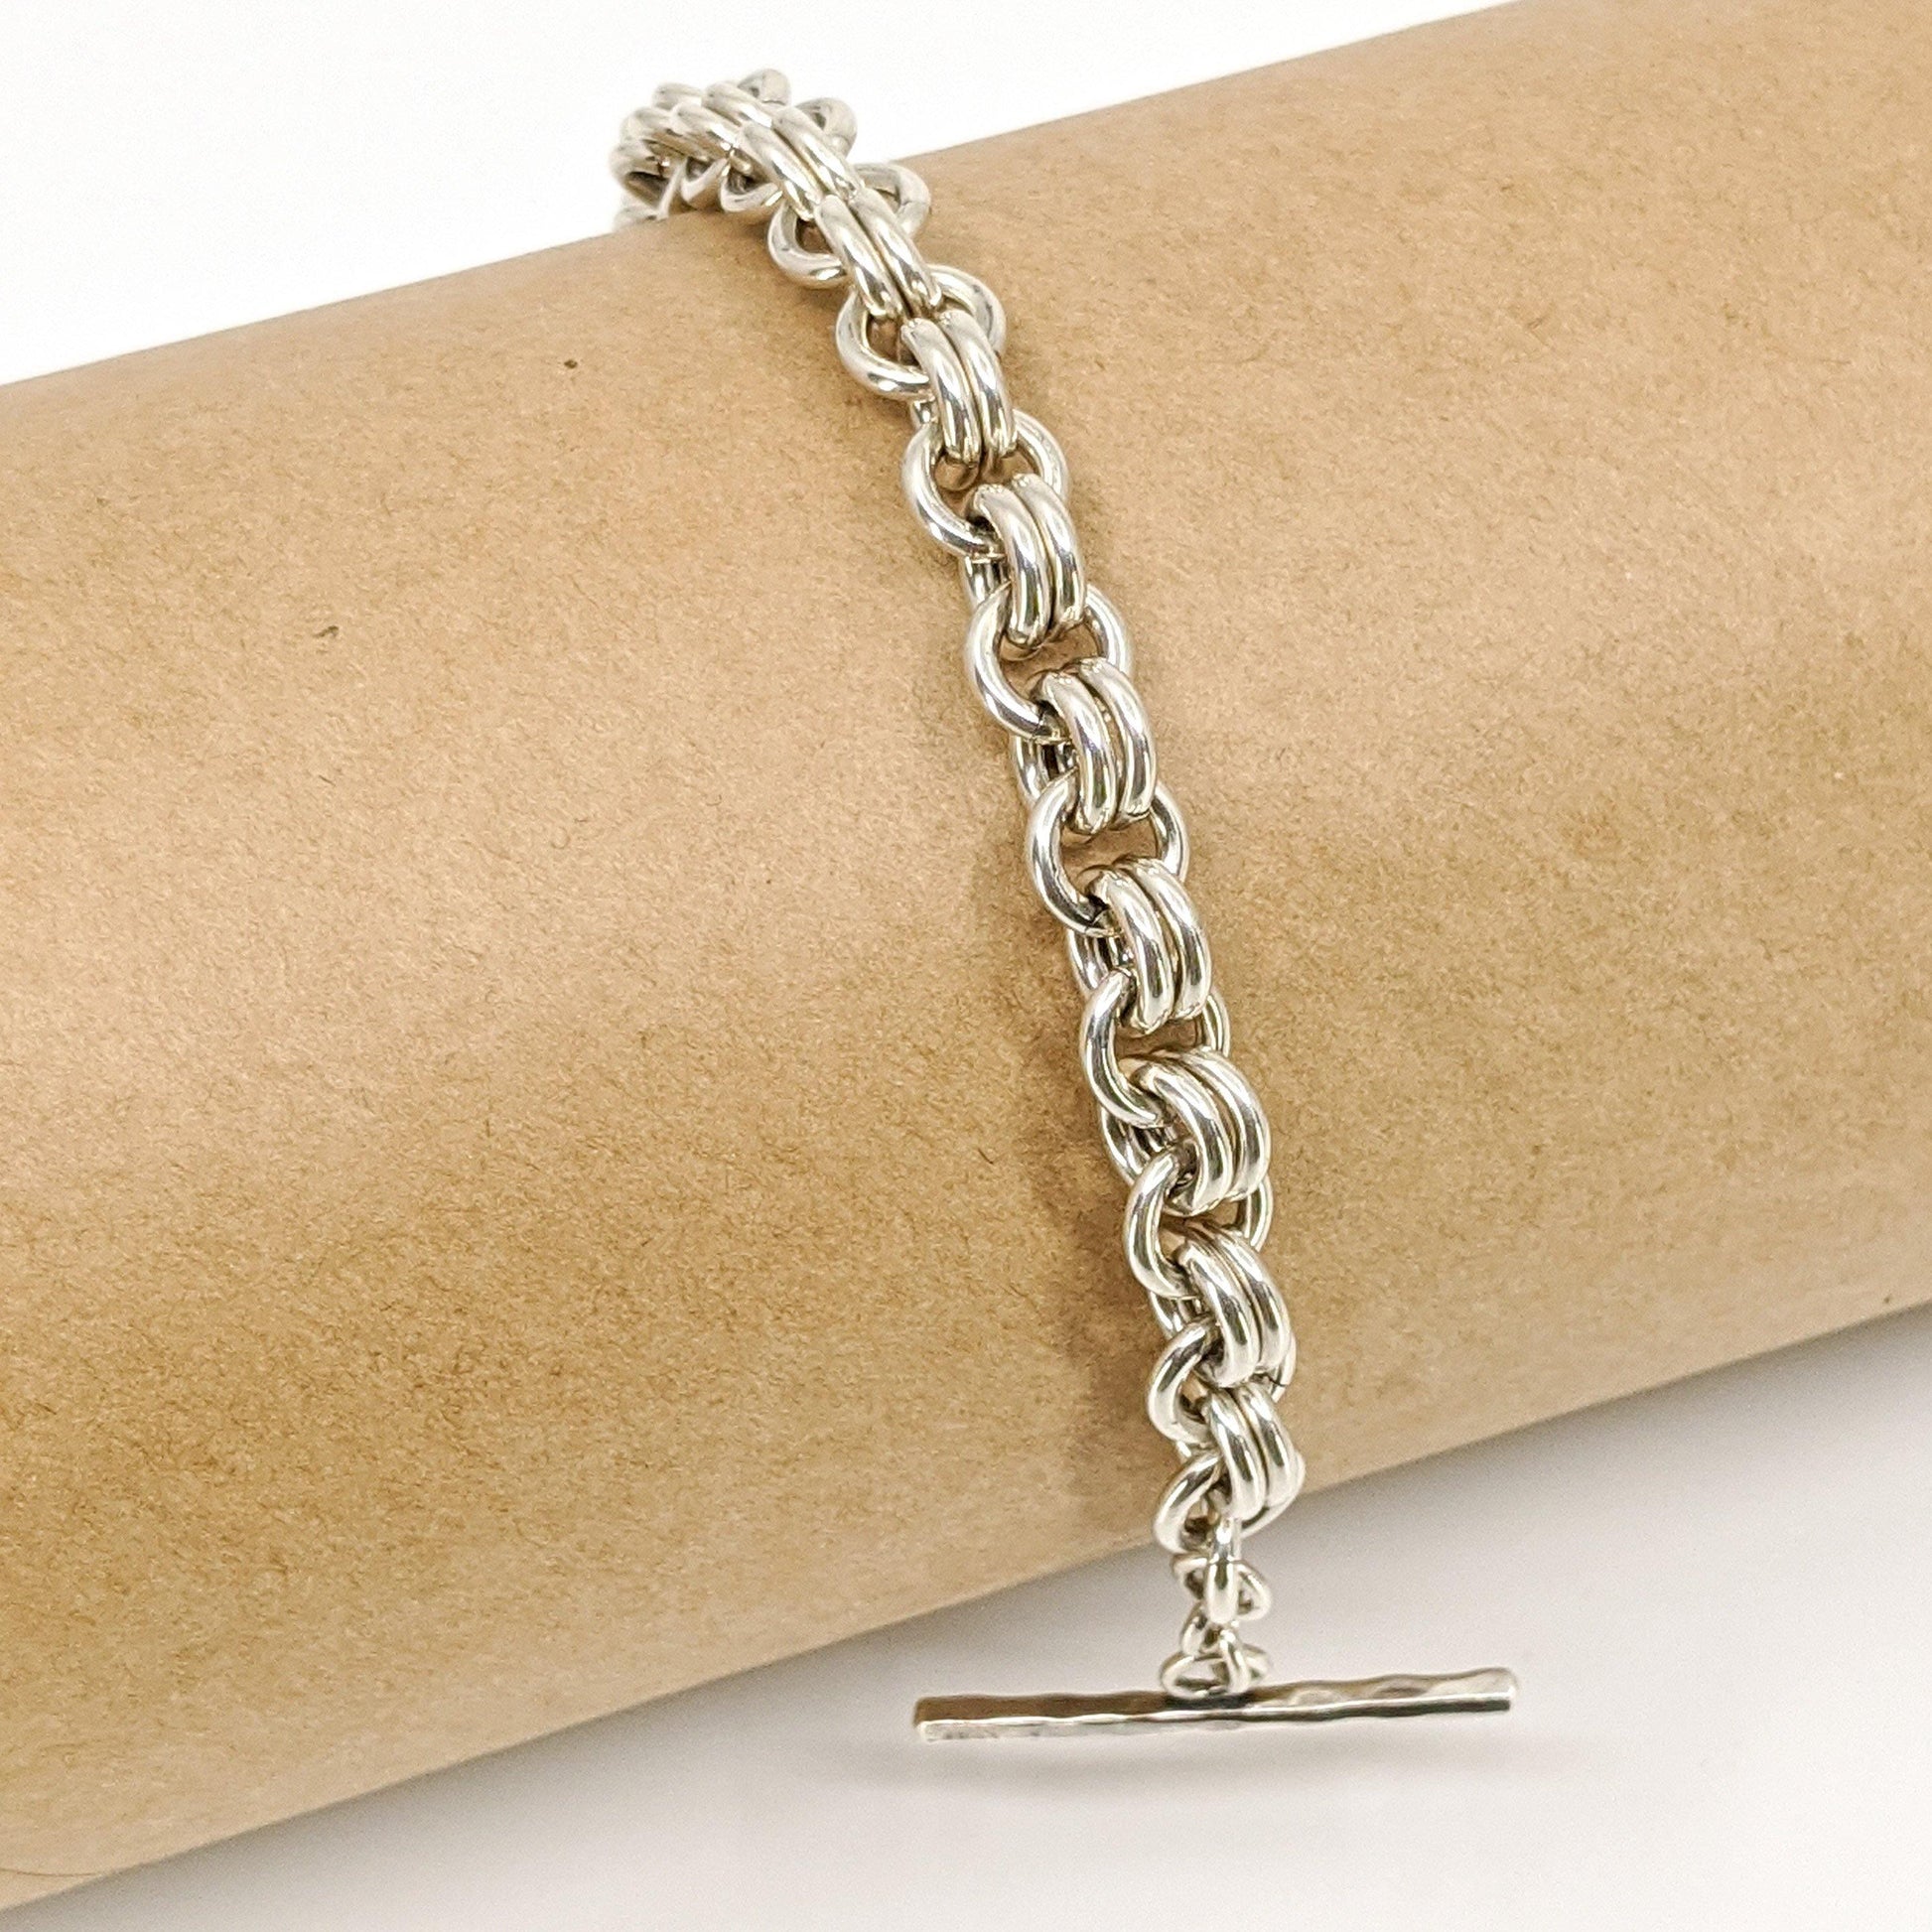 Sterling Silver Chain Mail Bracelet - Kristin Christopher